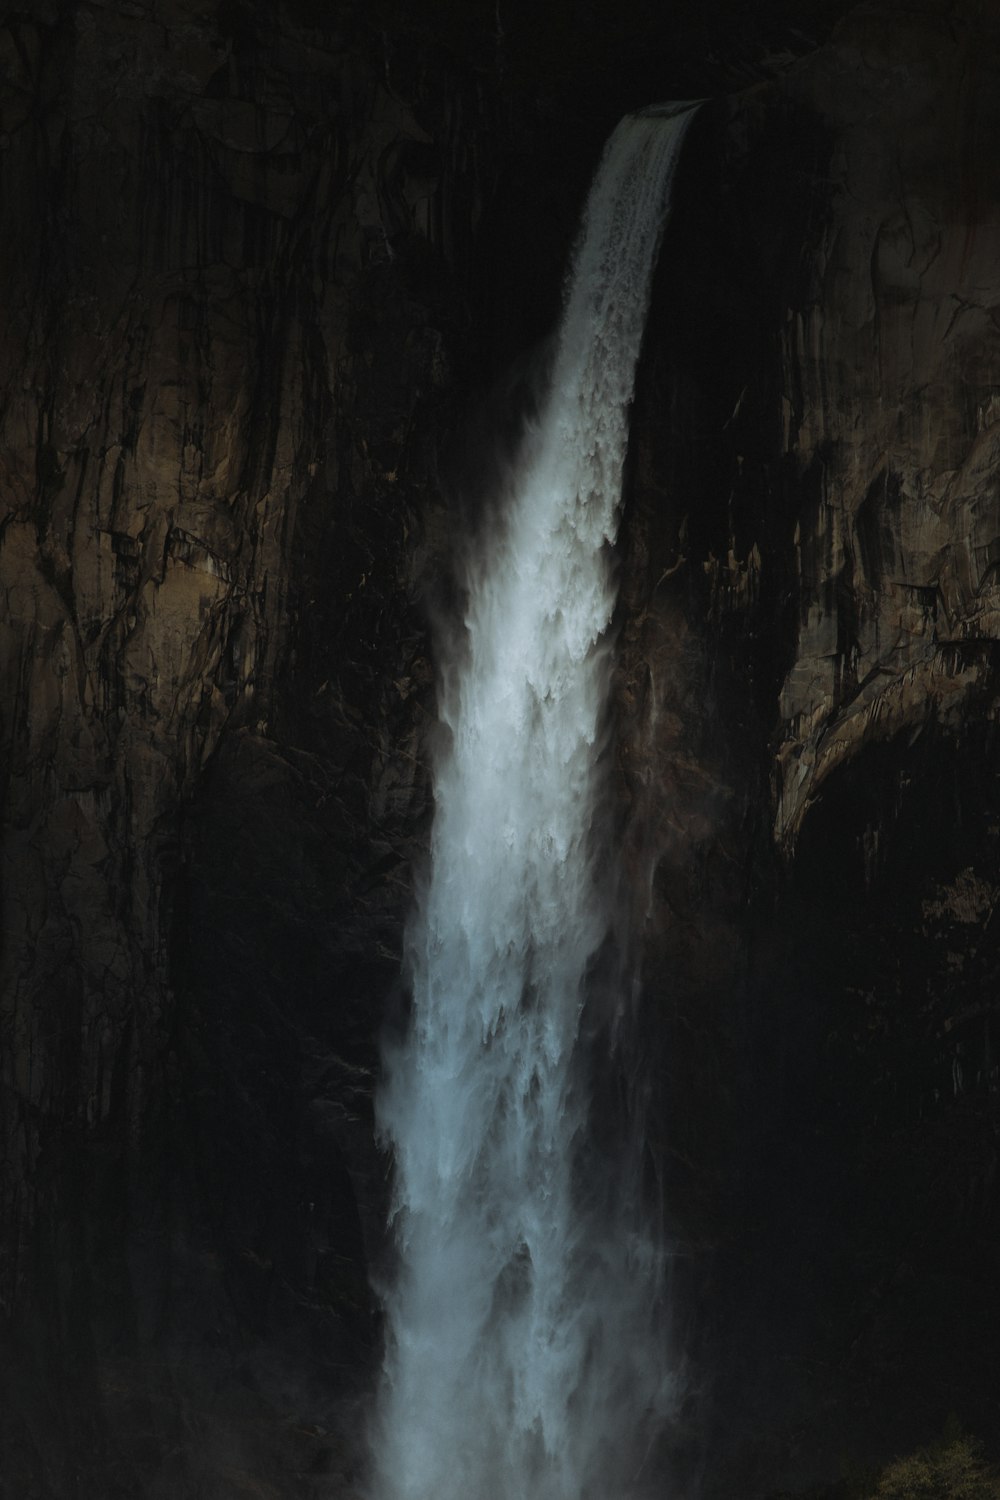 Fotografía de paisajes de cascadas